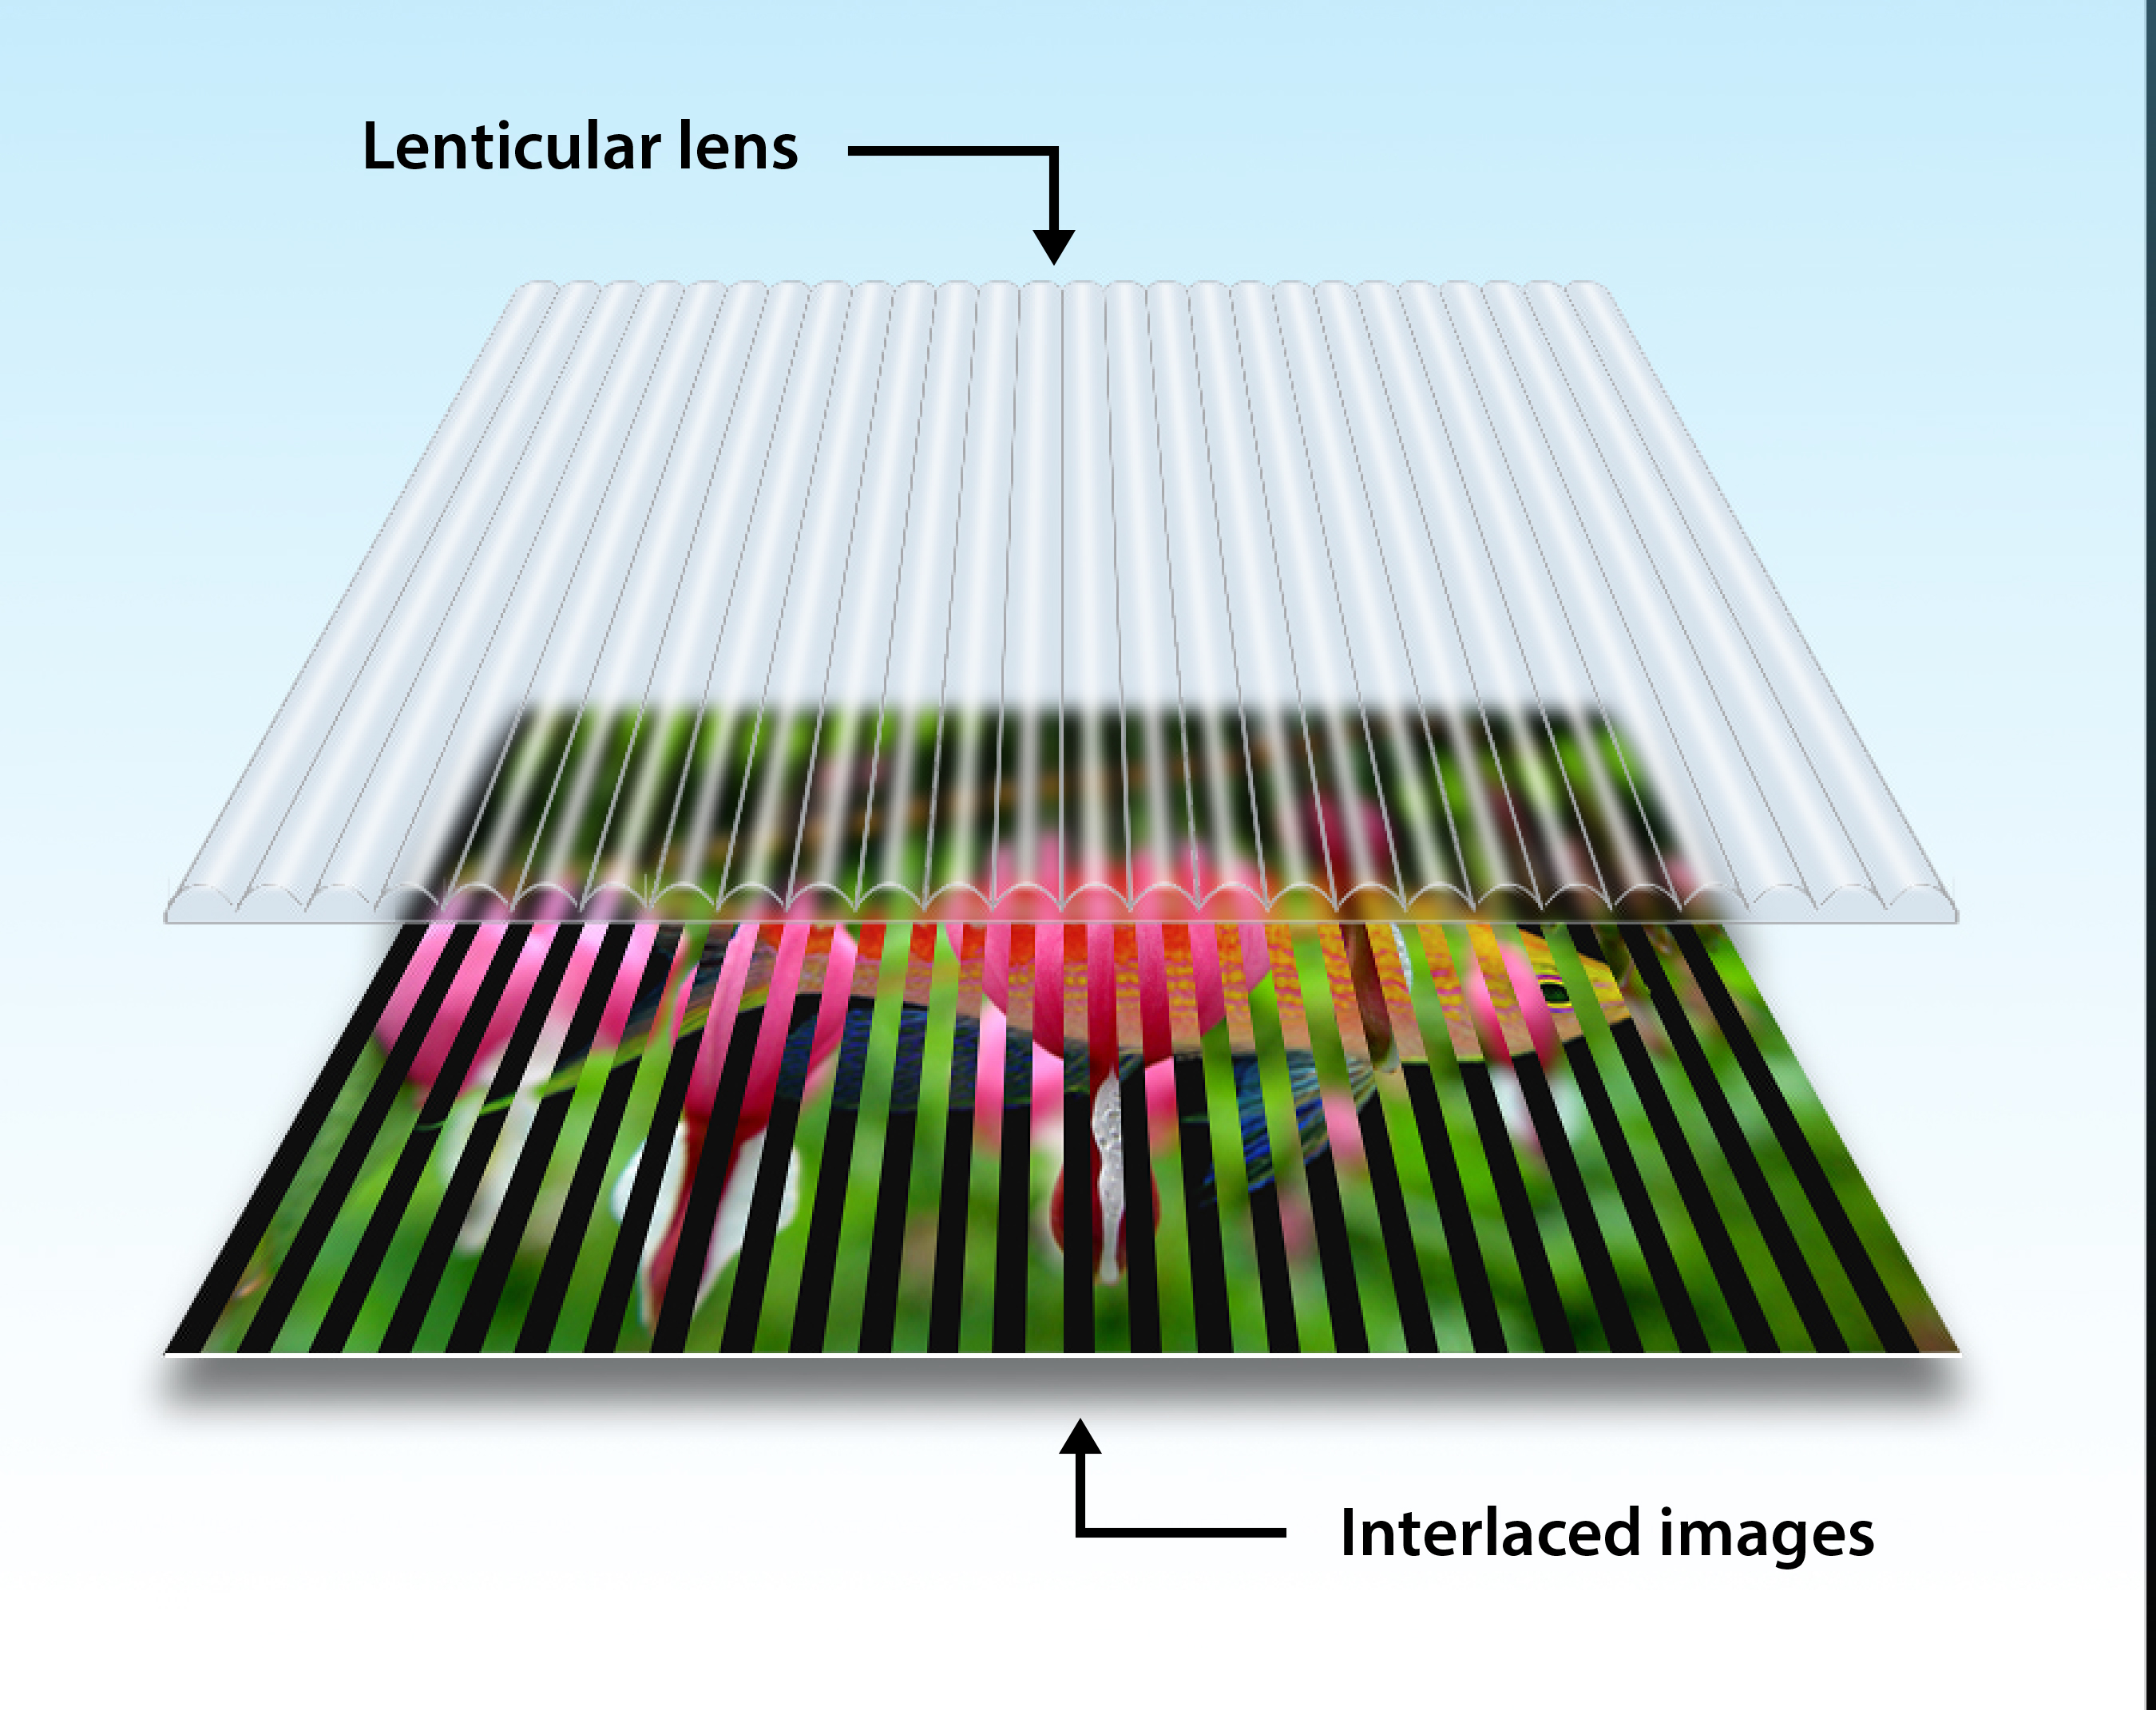 3D Lenticular Sheet Factory manufactures varies LPI lenticular sheet 